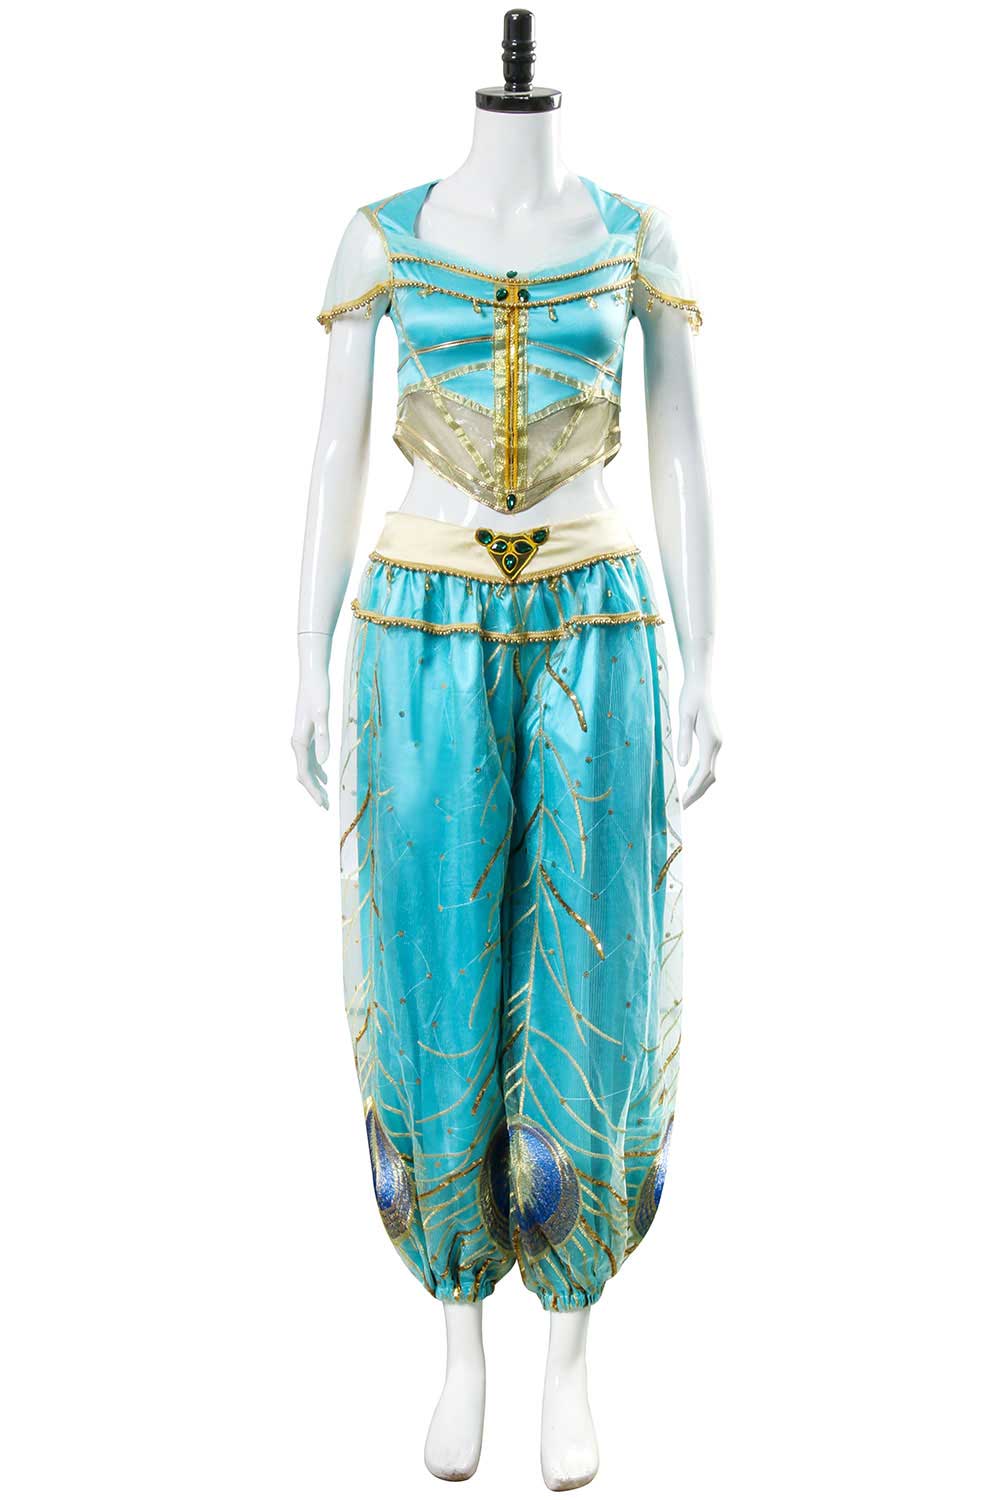 Disney Aladdin Princess Jasmine Cosplay Costume Adult Women Blue Dress Veil Movie Replica